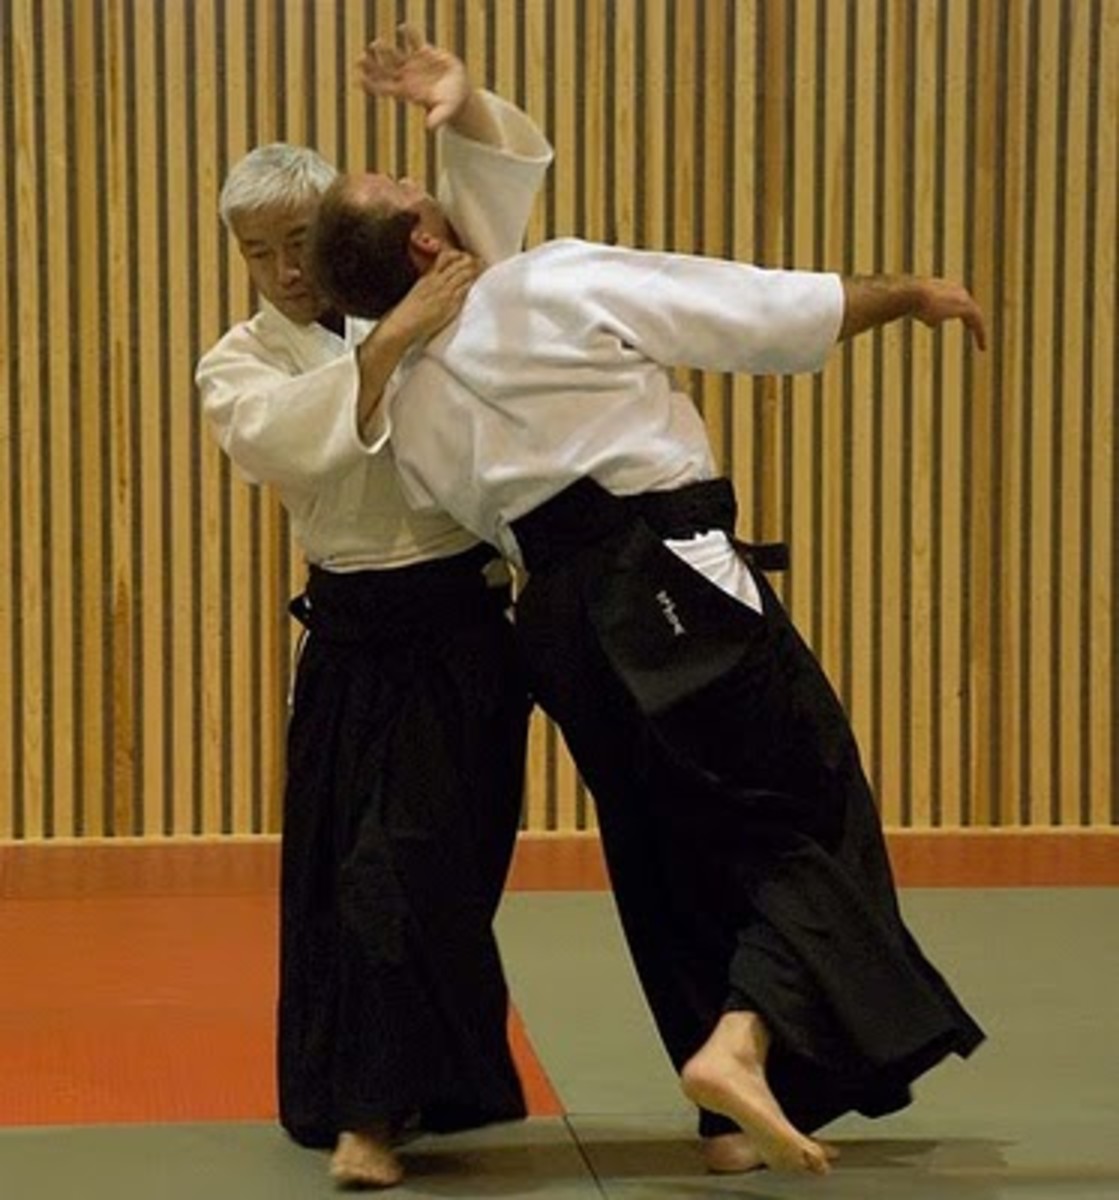 Irimi Nage in Aikido - “Entering Throw”